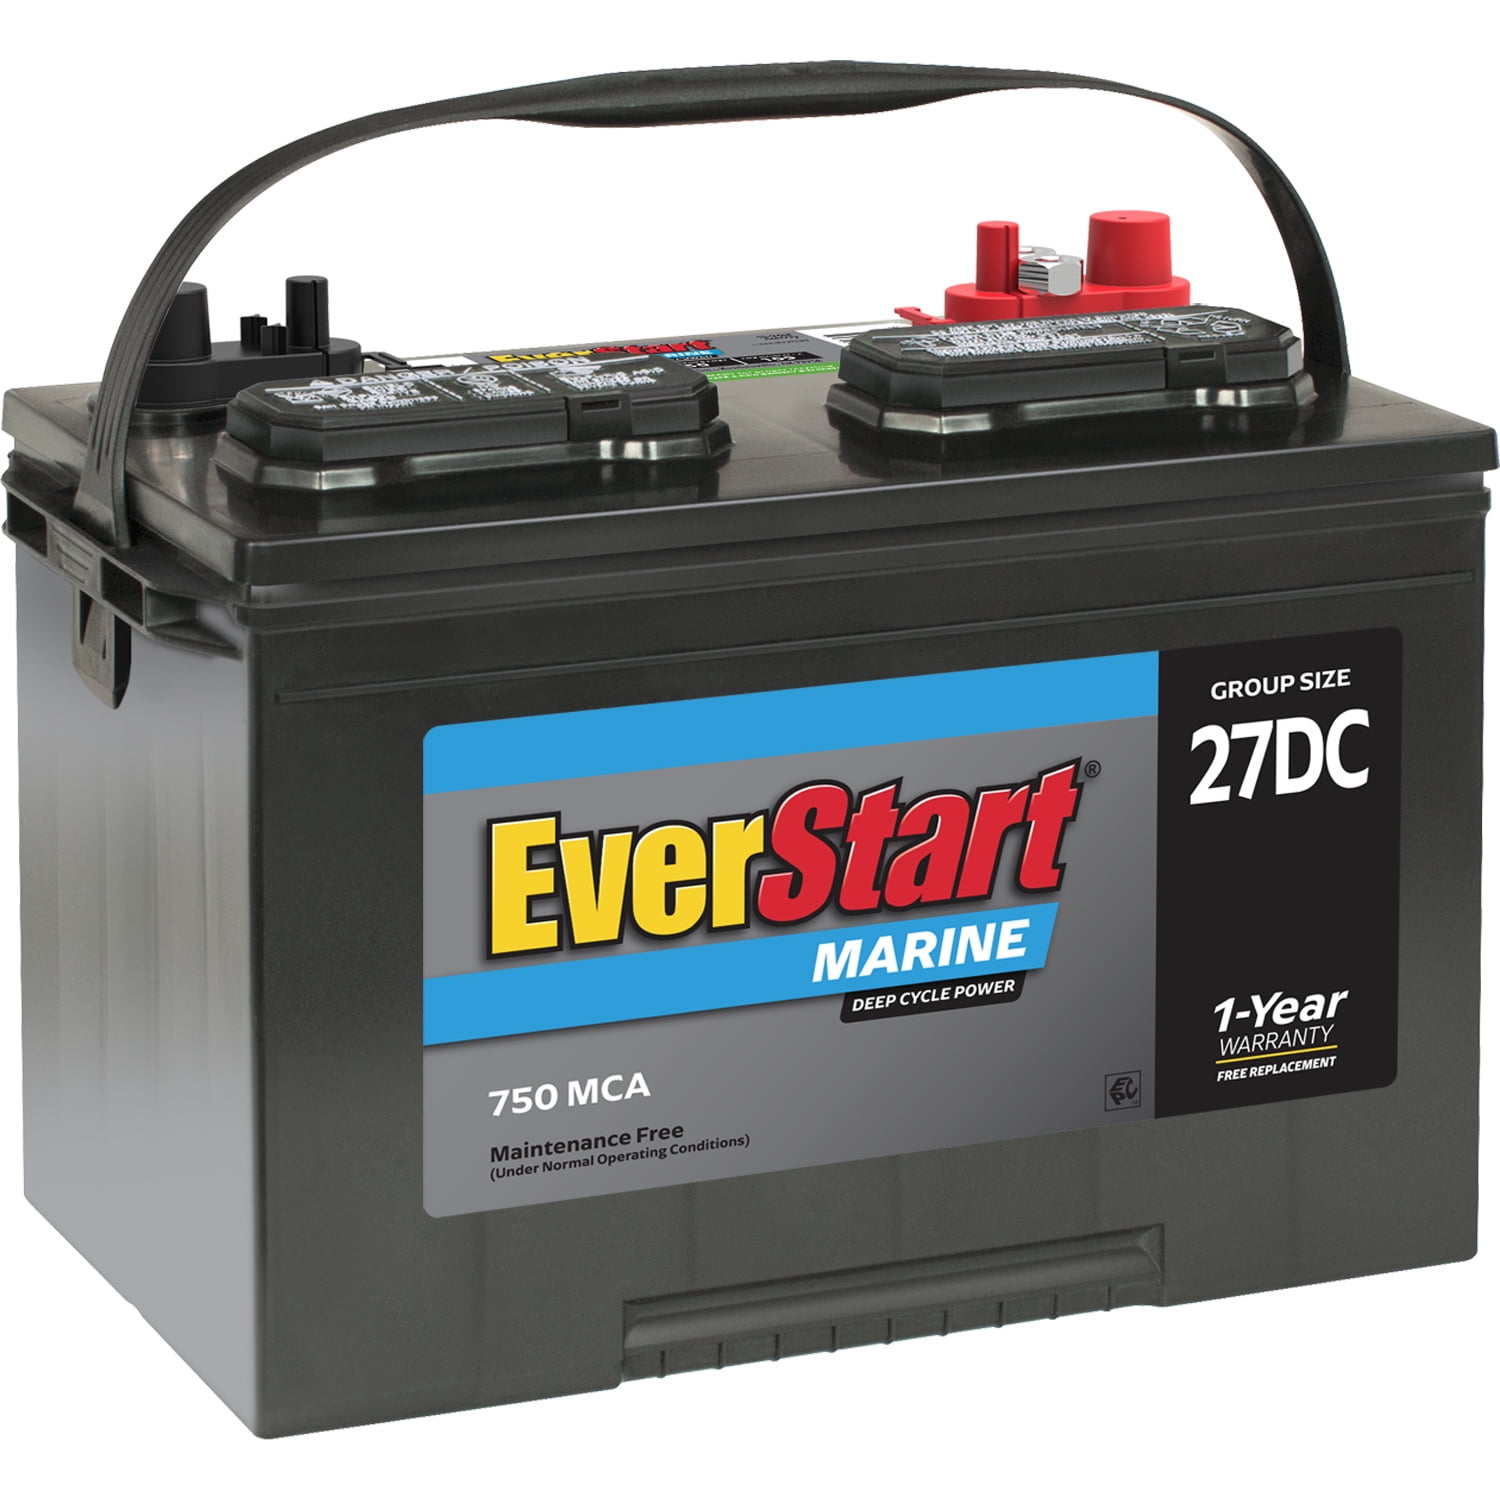 EverStart Lead Acid & RV Deep Cycle Battery, Group Size 27DC (12 Volt/750 MCA) - Walmart.com